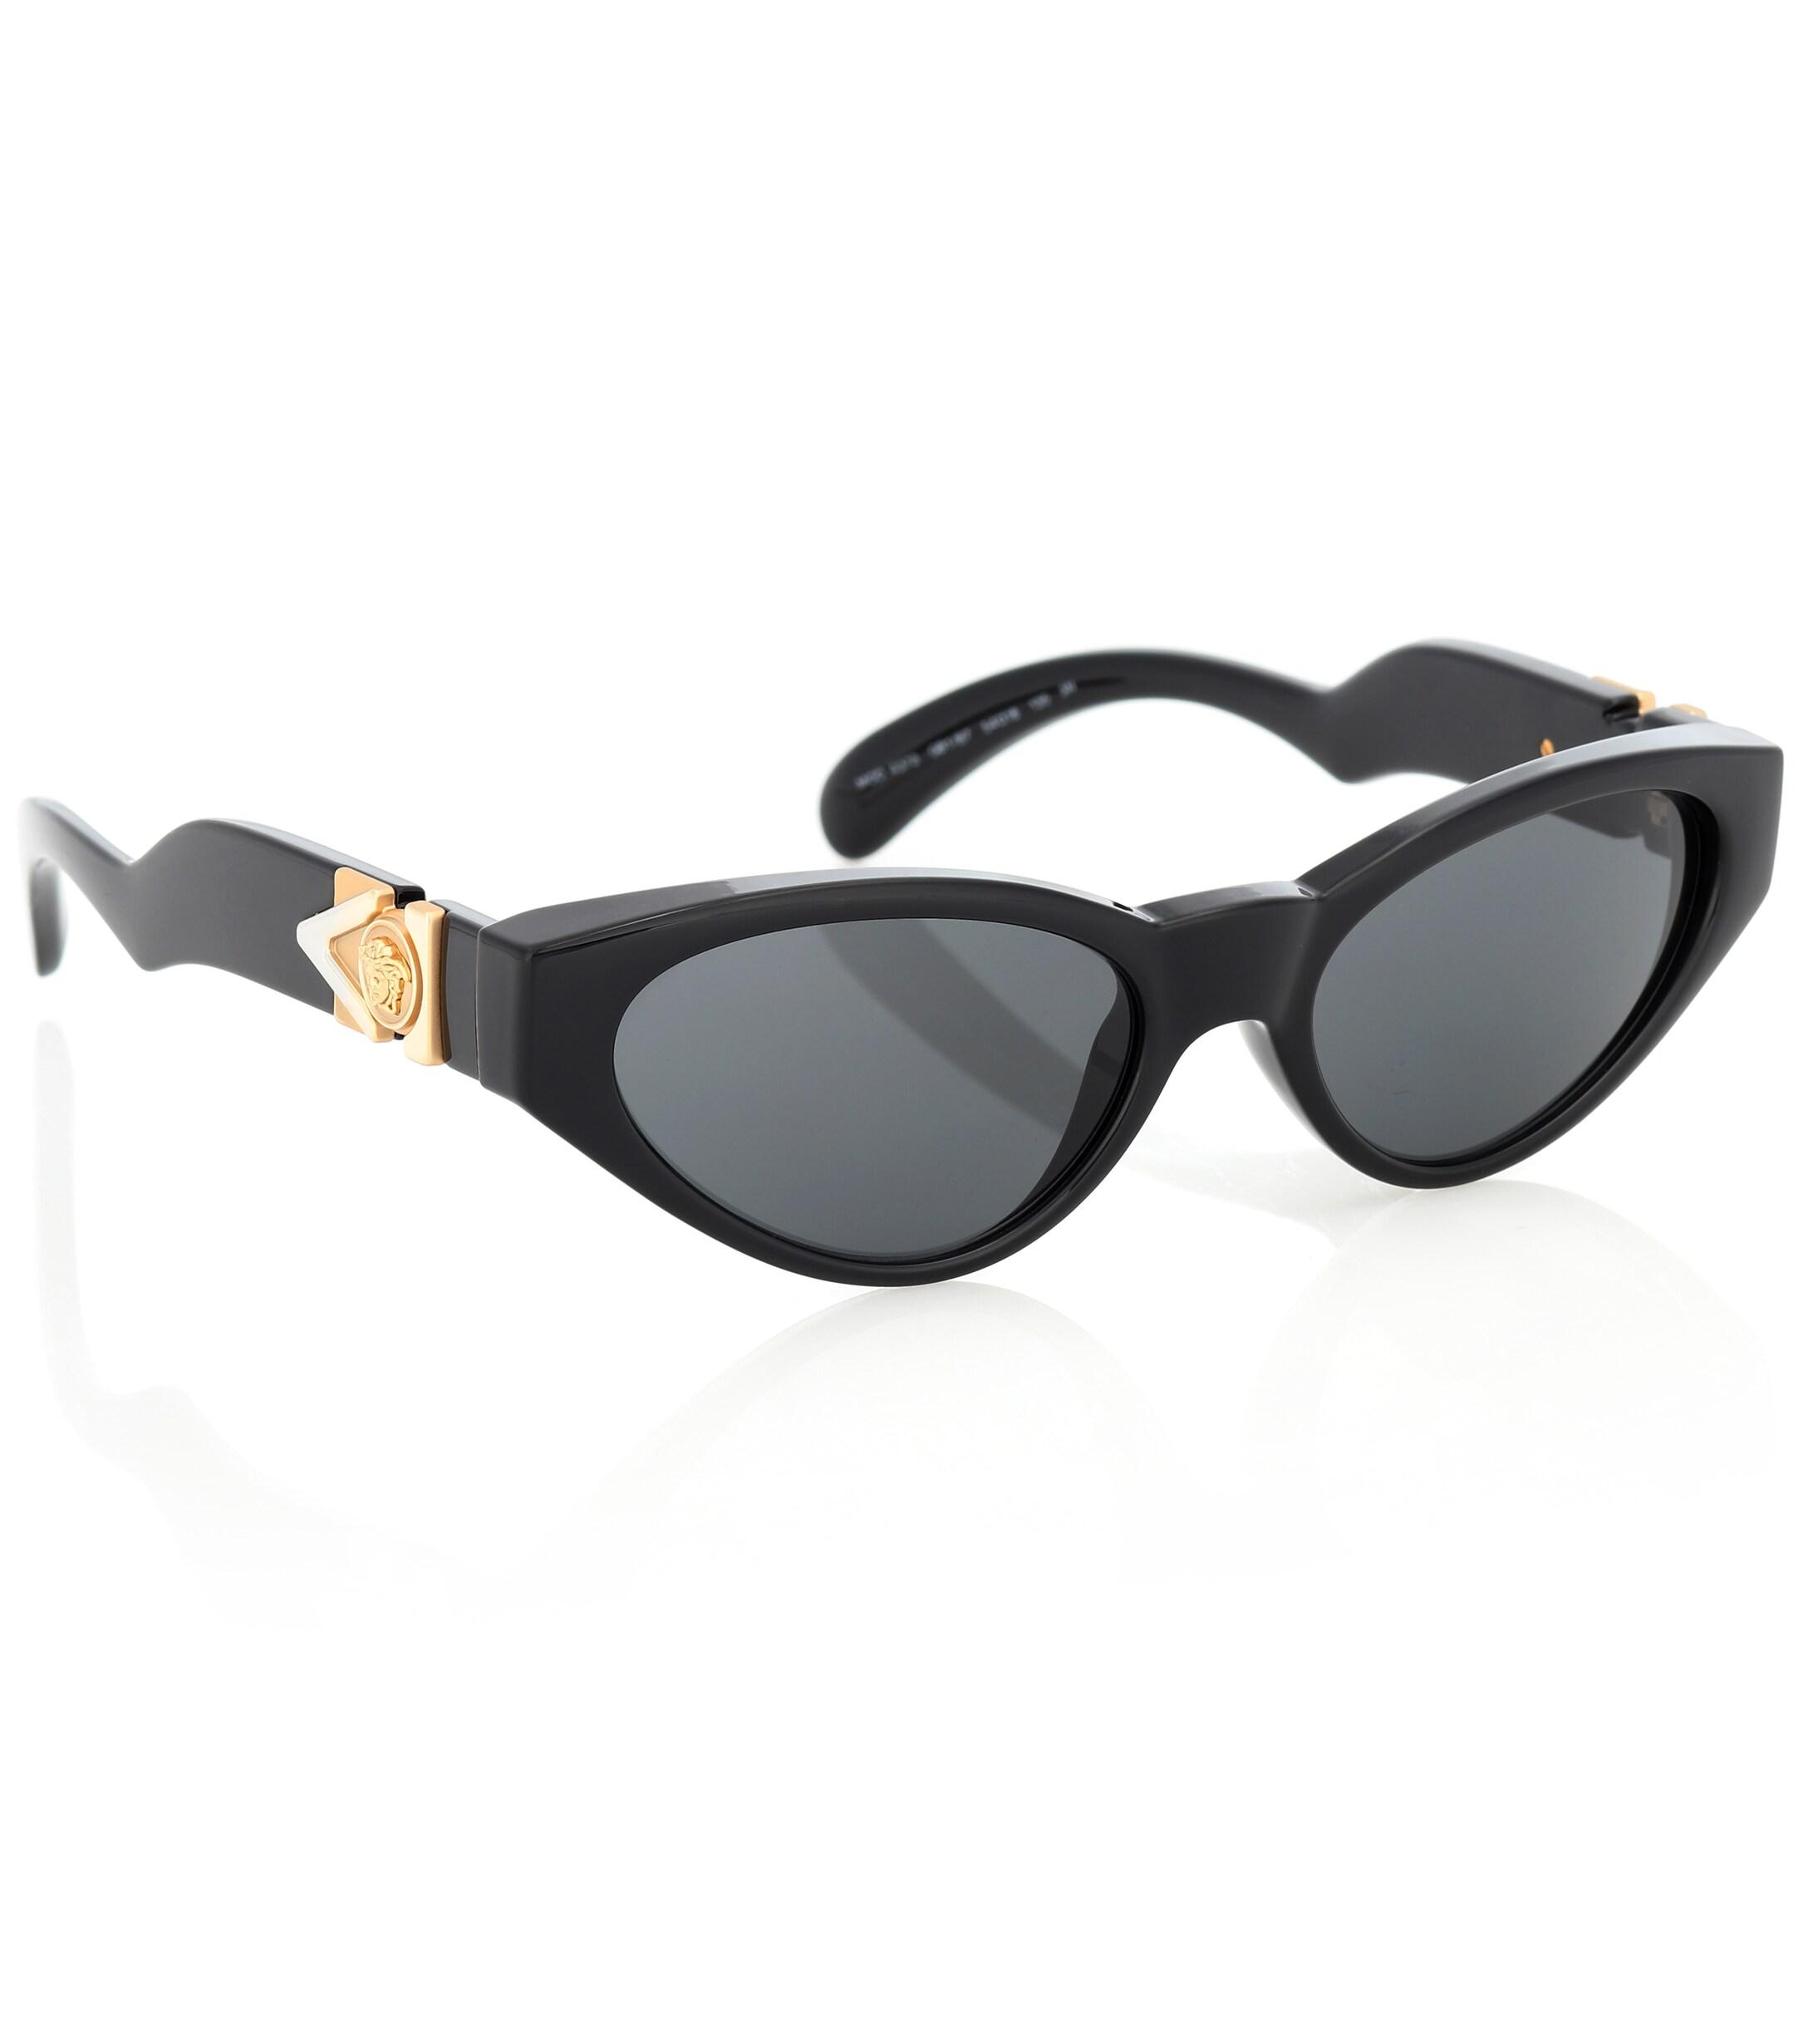 versace cat eye sunglasses with medusa detail